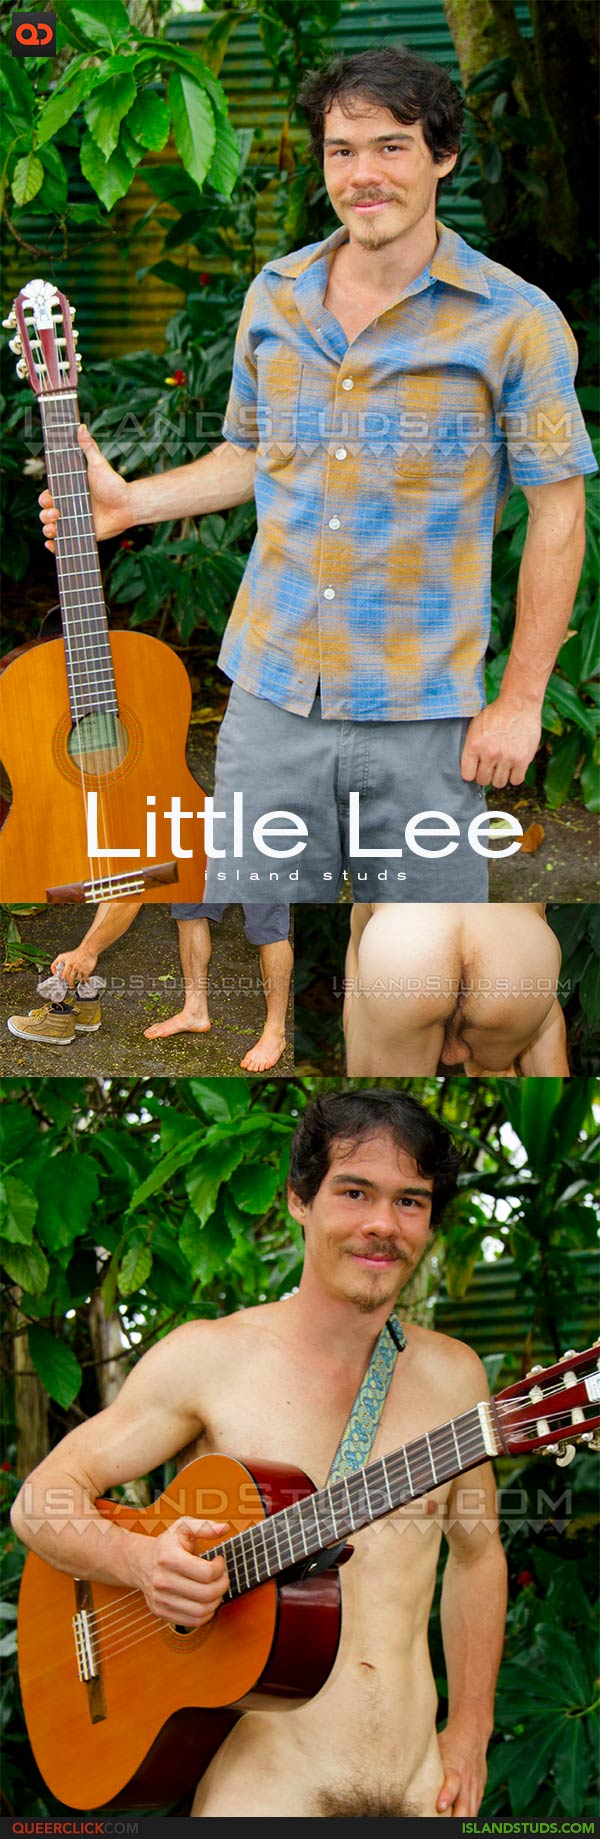 IslandStuds: Little Lee